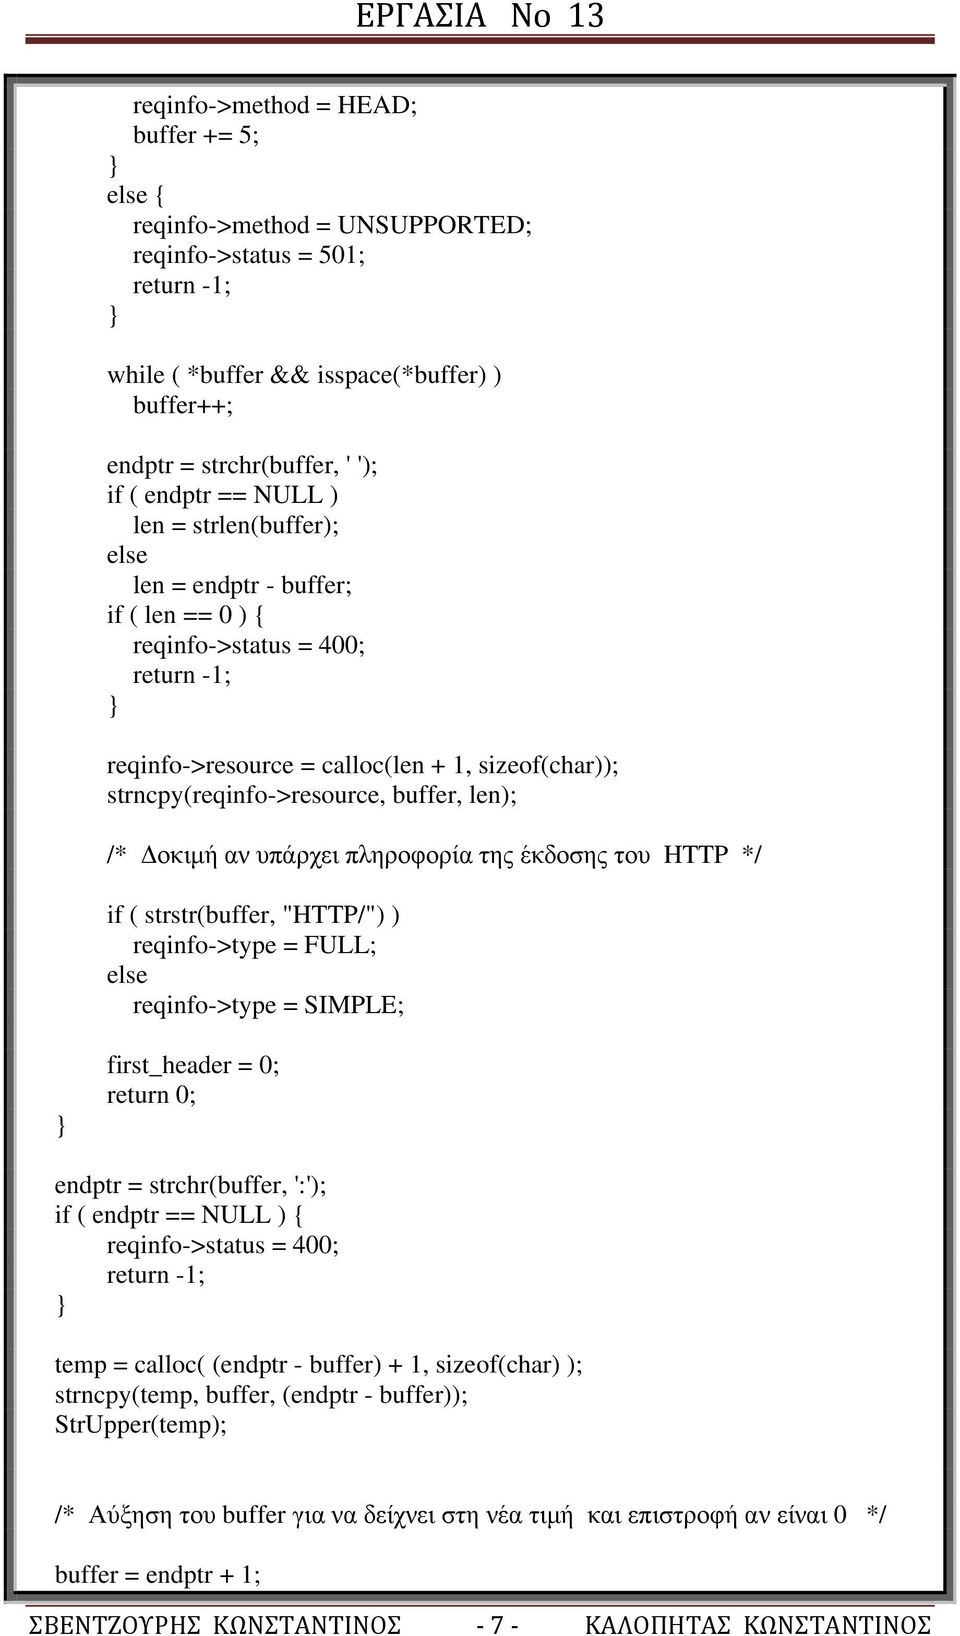 len); /* οκιµή αν υπάρχει πληροφορία της έκδοσης του HTTP */ if ( strstr(buffer, "HTTP/") ) reqinfo->type = FULL; else reqinfo->type = SIMPLE; first_header = 0; endptr = strchr(buffer, ':'); if (